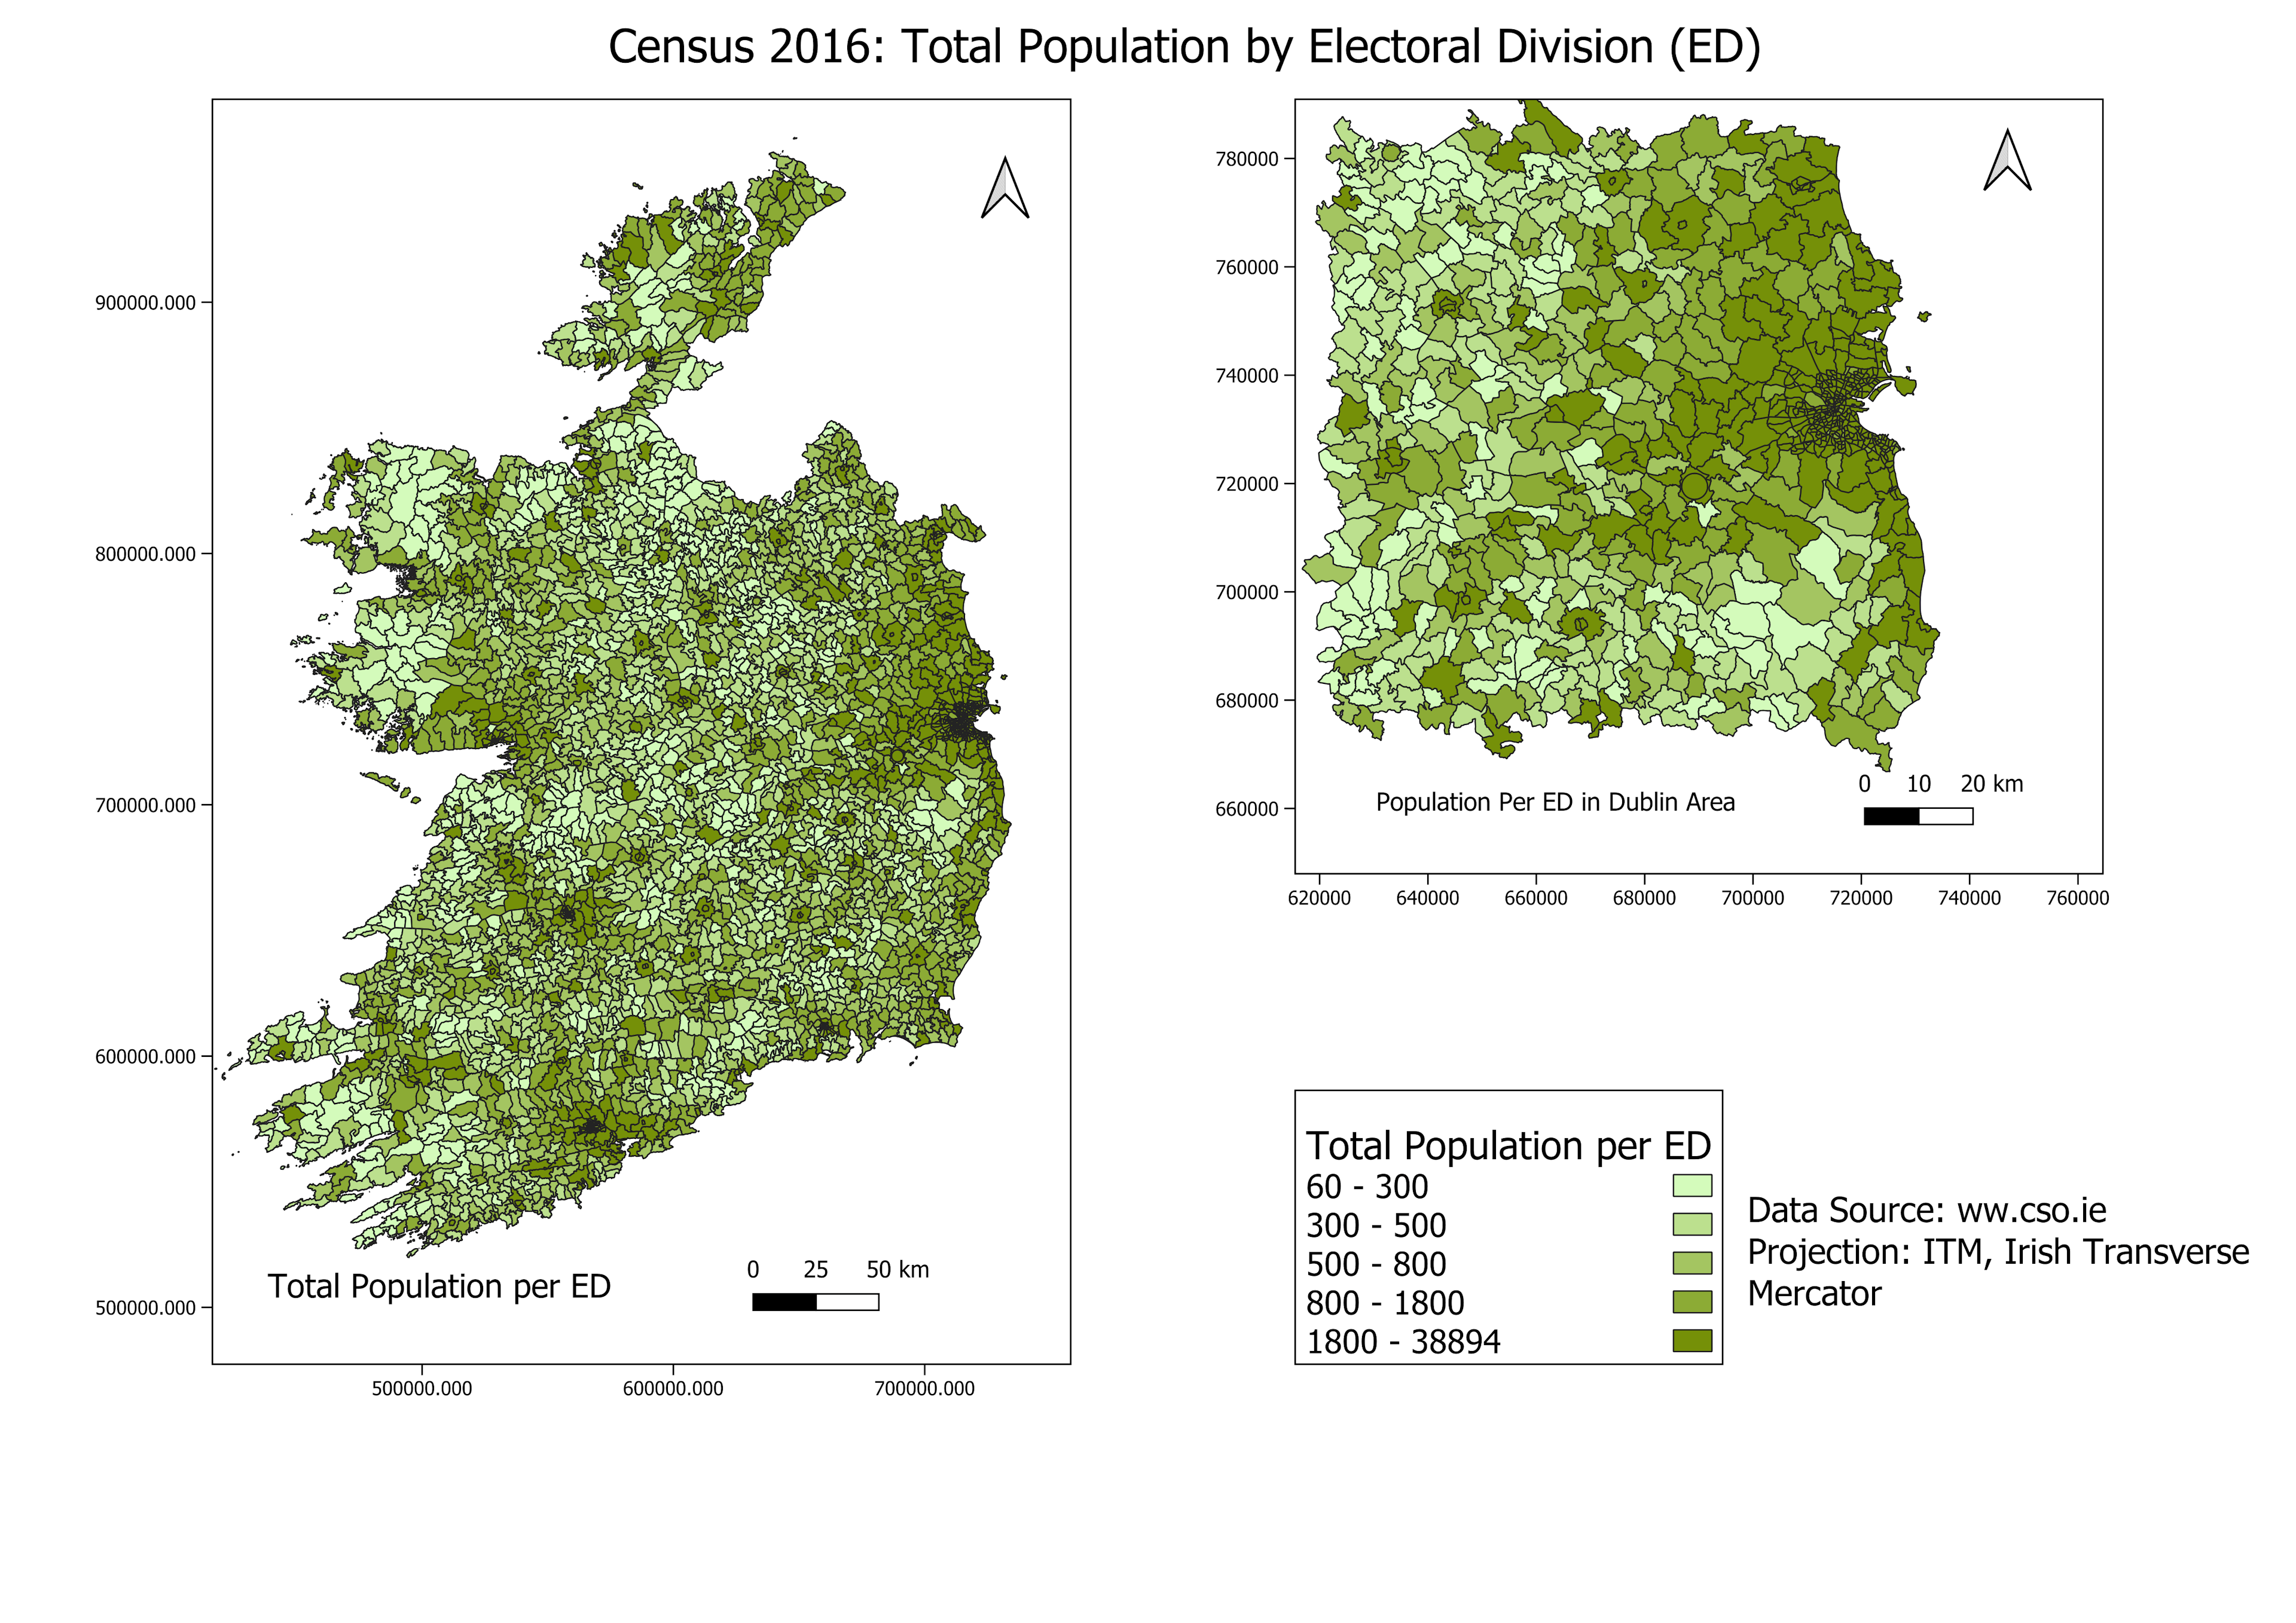 Total Population per Electoral Division